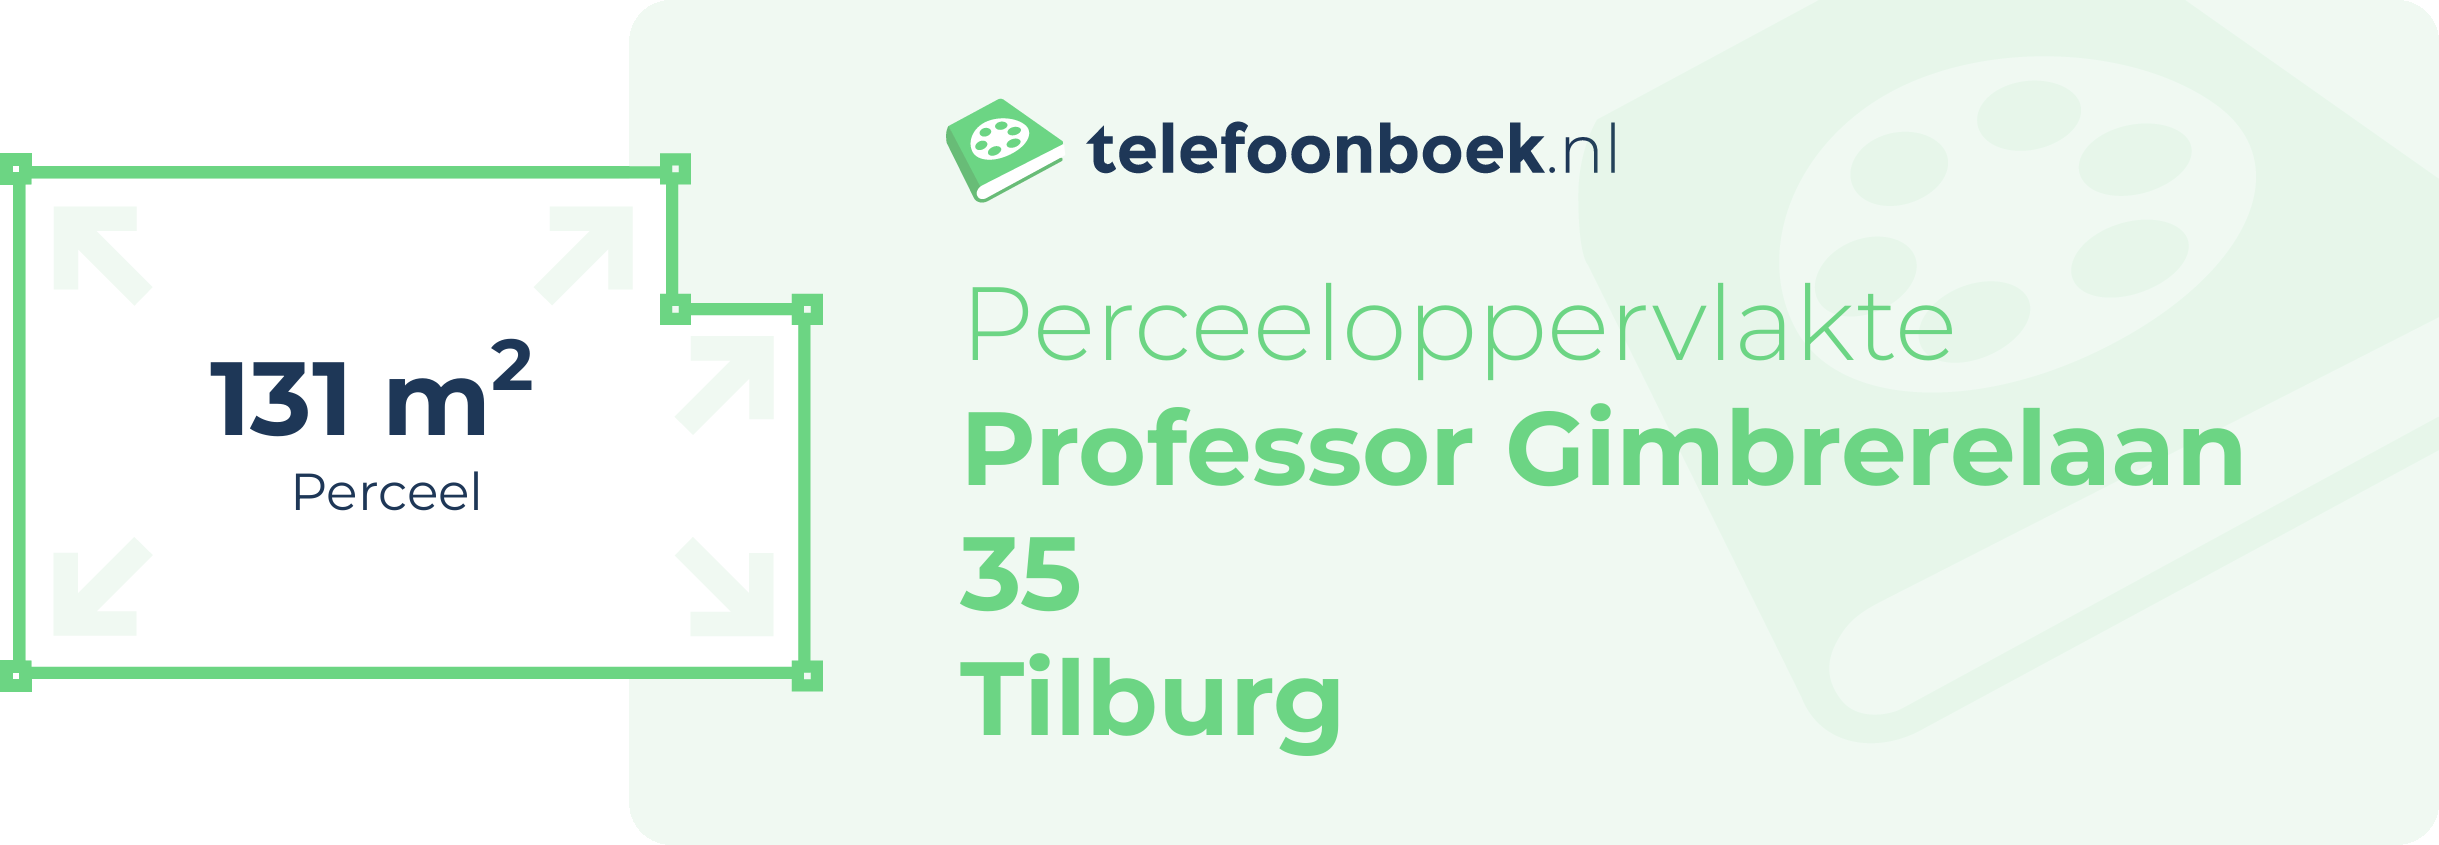 Perceeloppervlakte Professor Gimbrerelaan 35 Tilburg